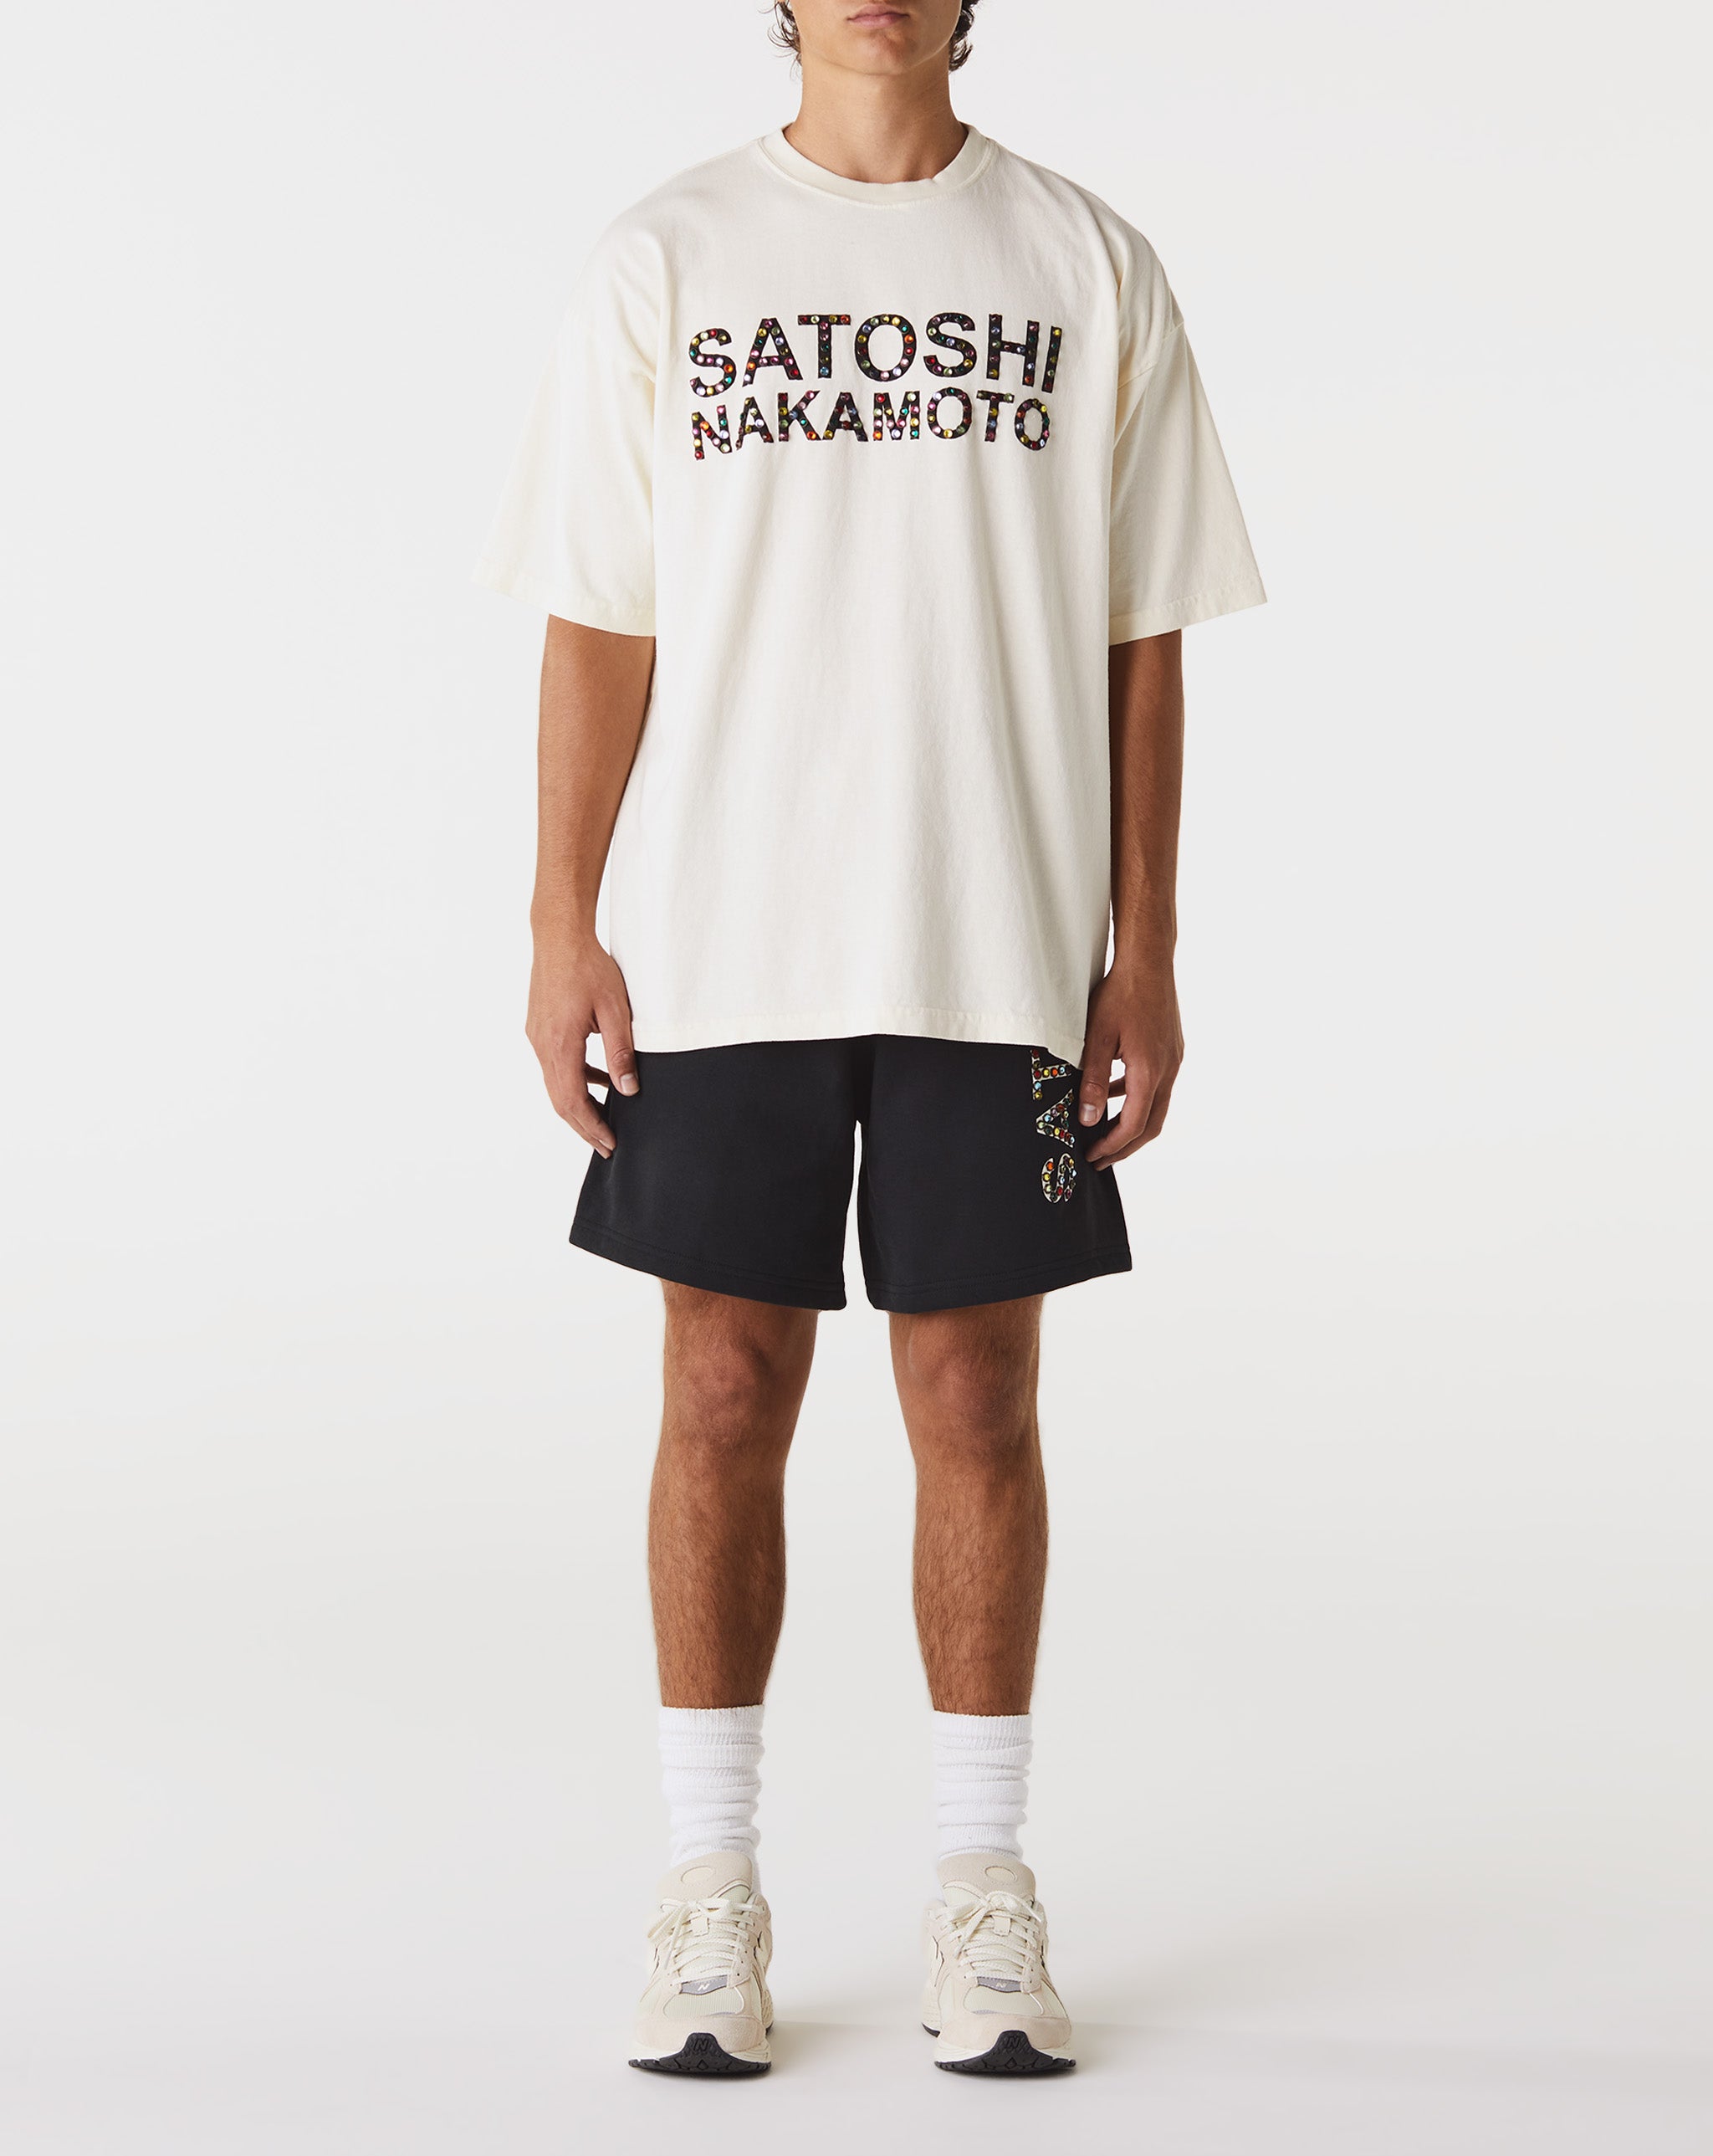 Satoshi Nakamoto Invert Pocket Short  - Cheap Urlfreeze Jordan outlet